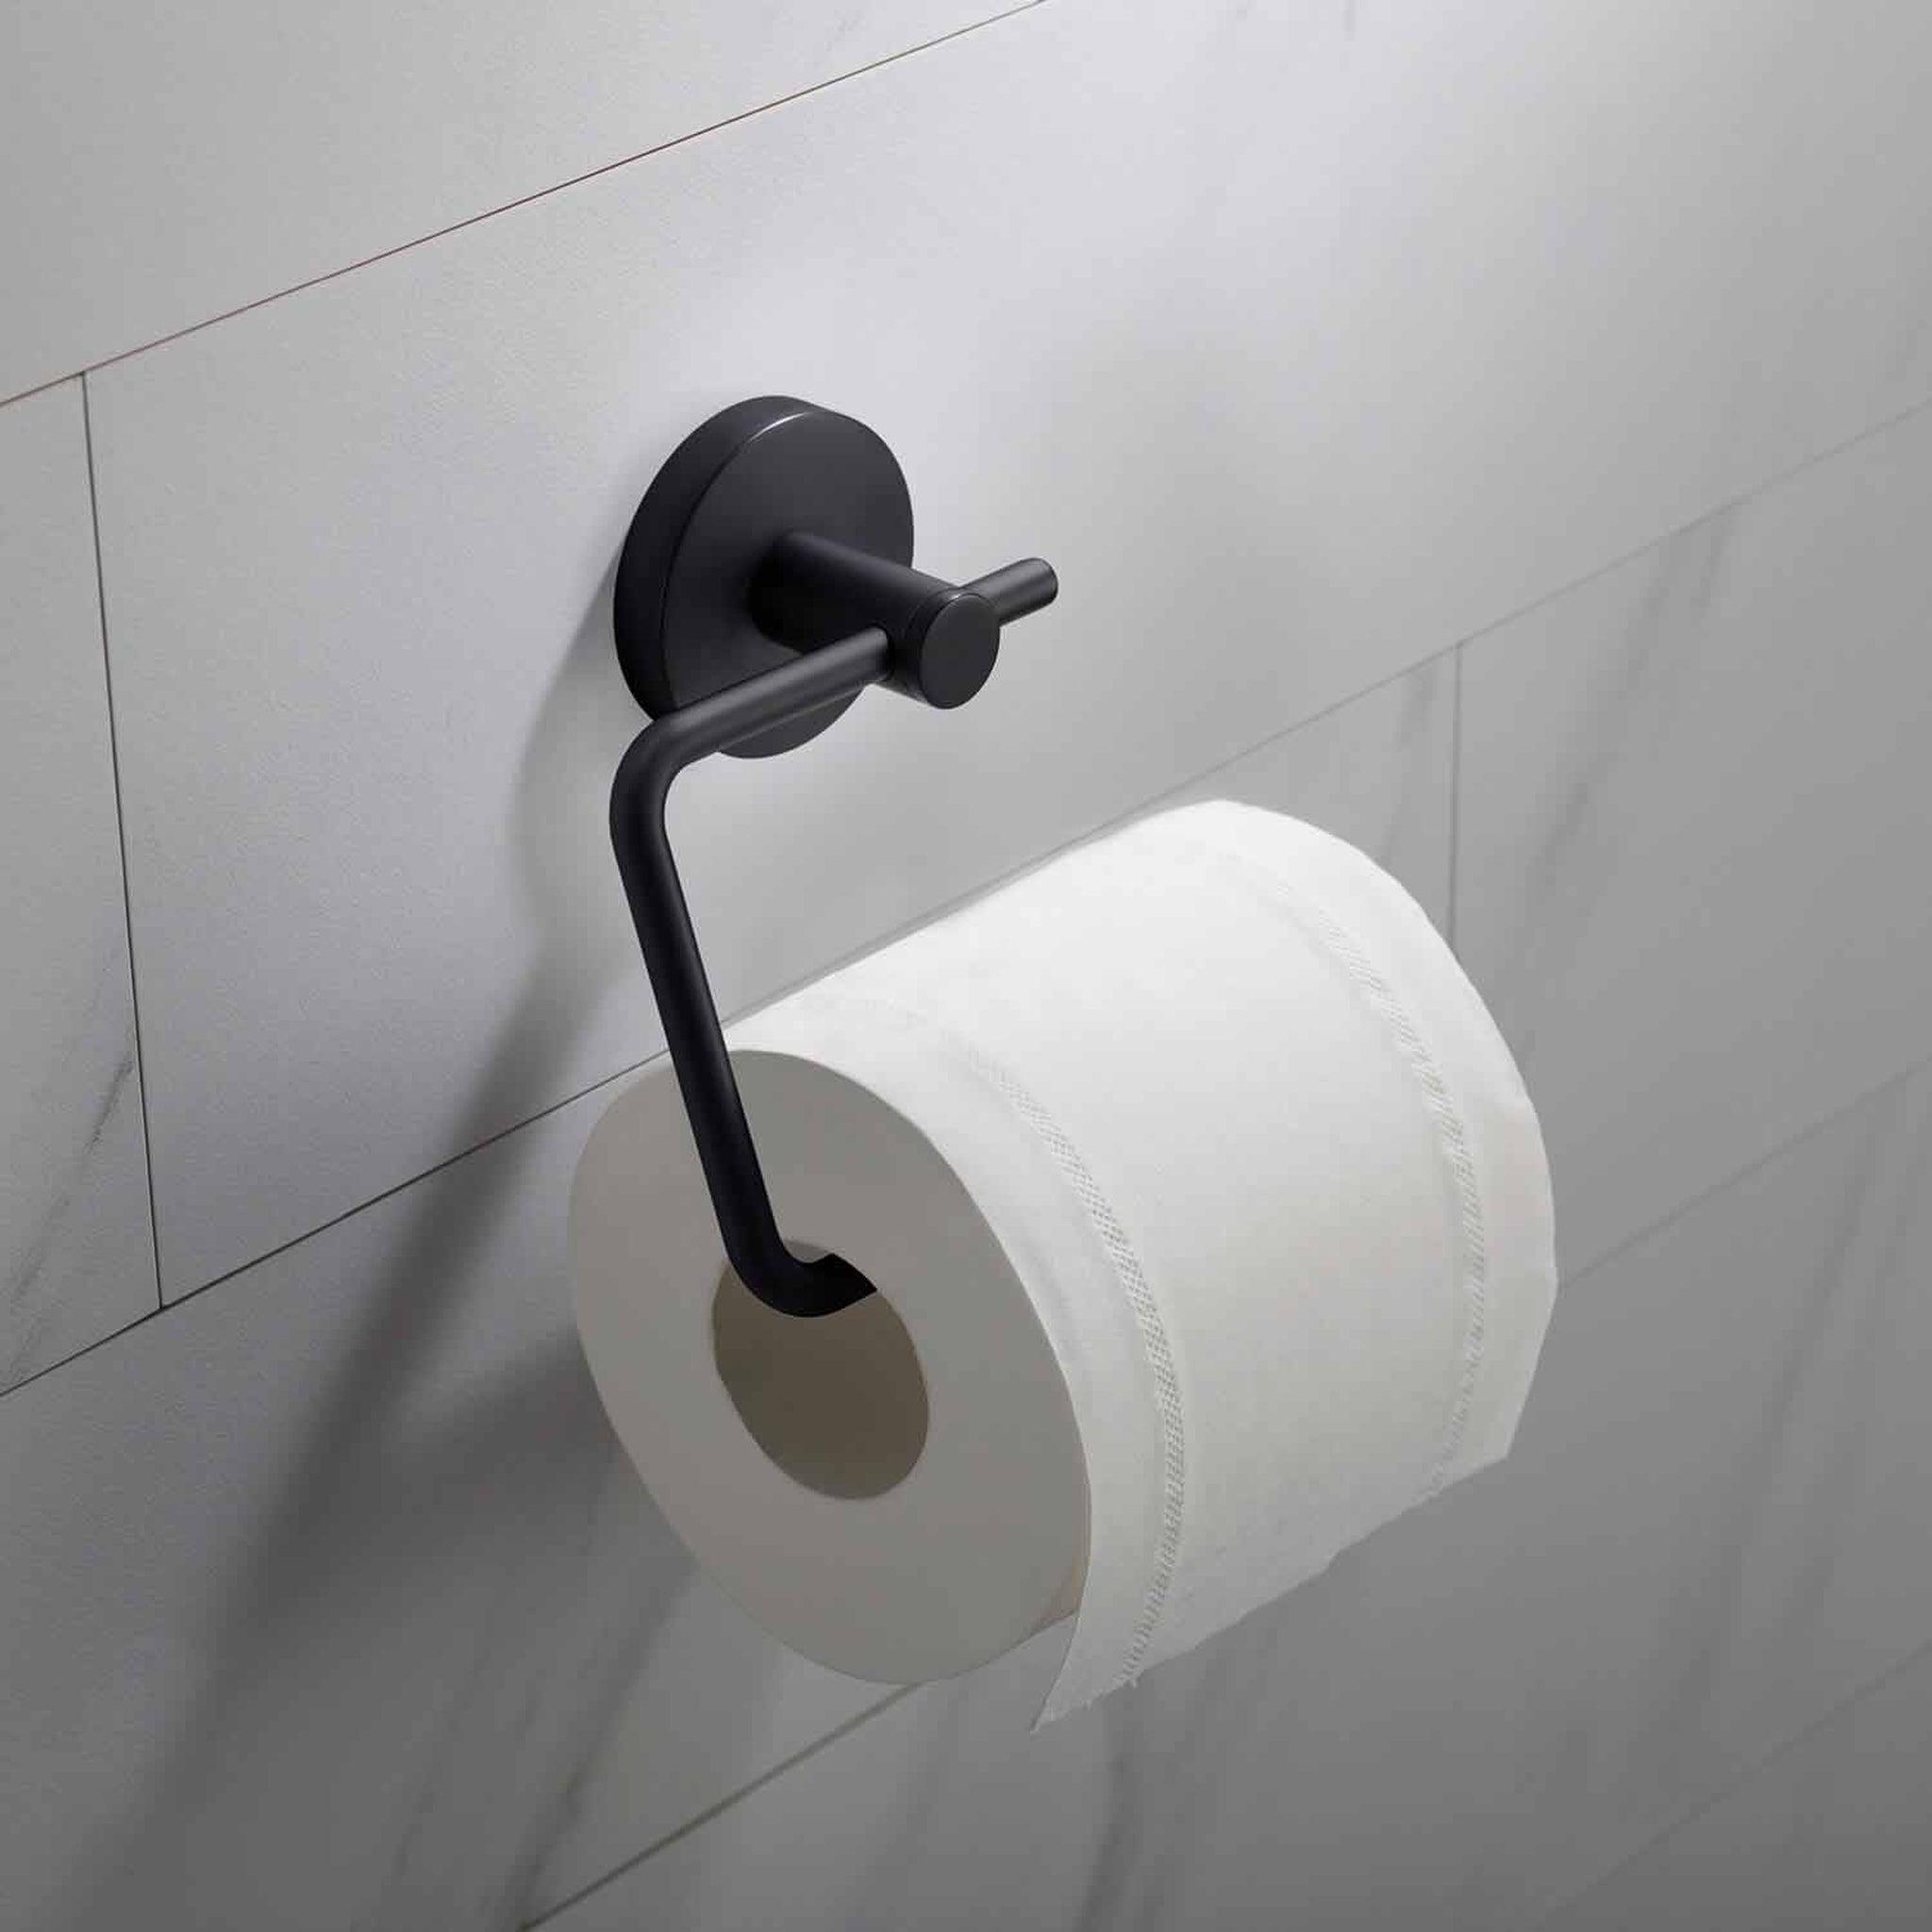 KIBI, KIBI Circular Brass Bathroom Toilet Paper Holder in Matte Black Finish